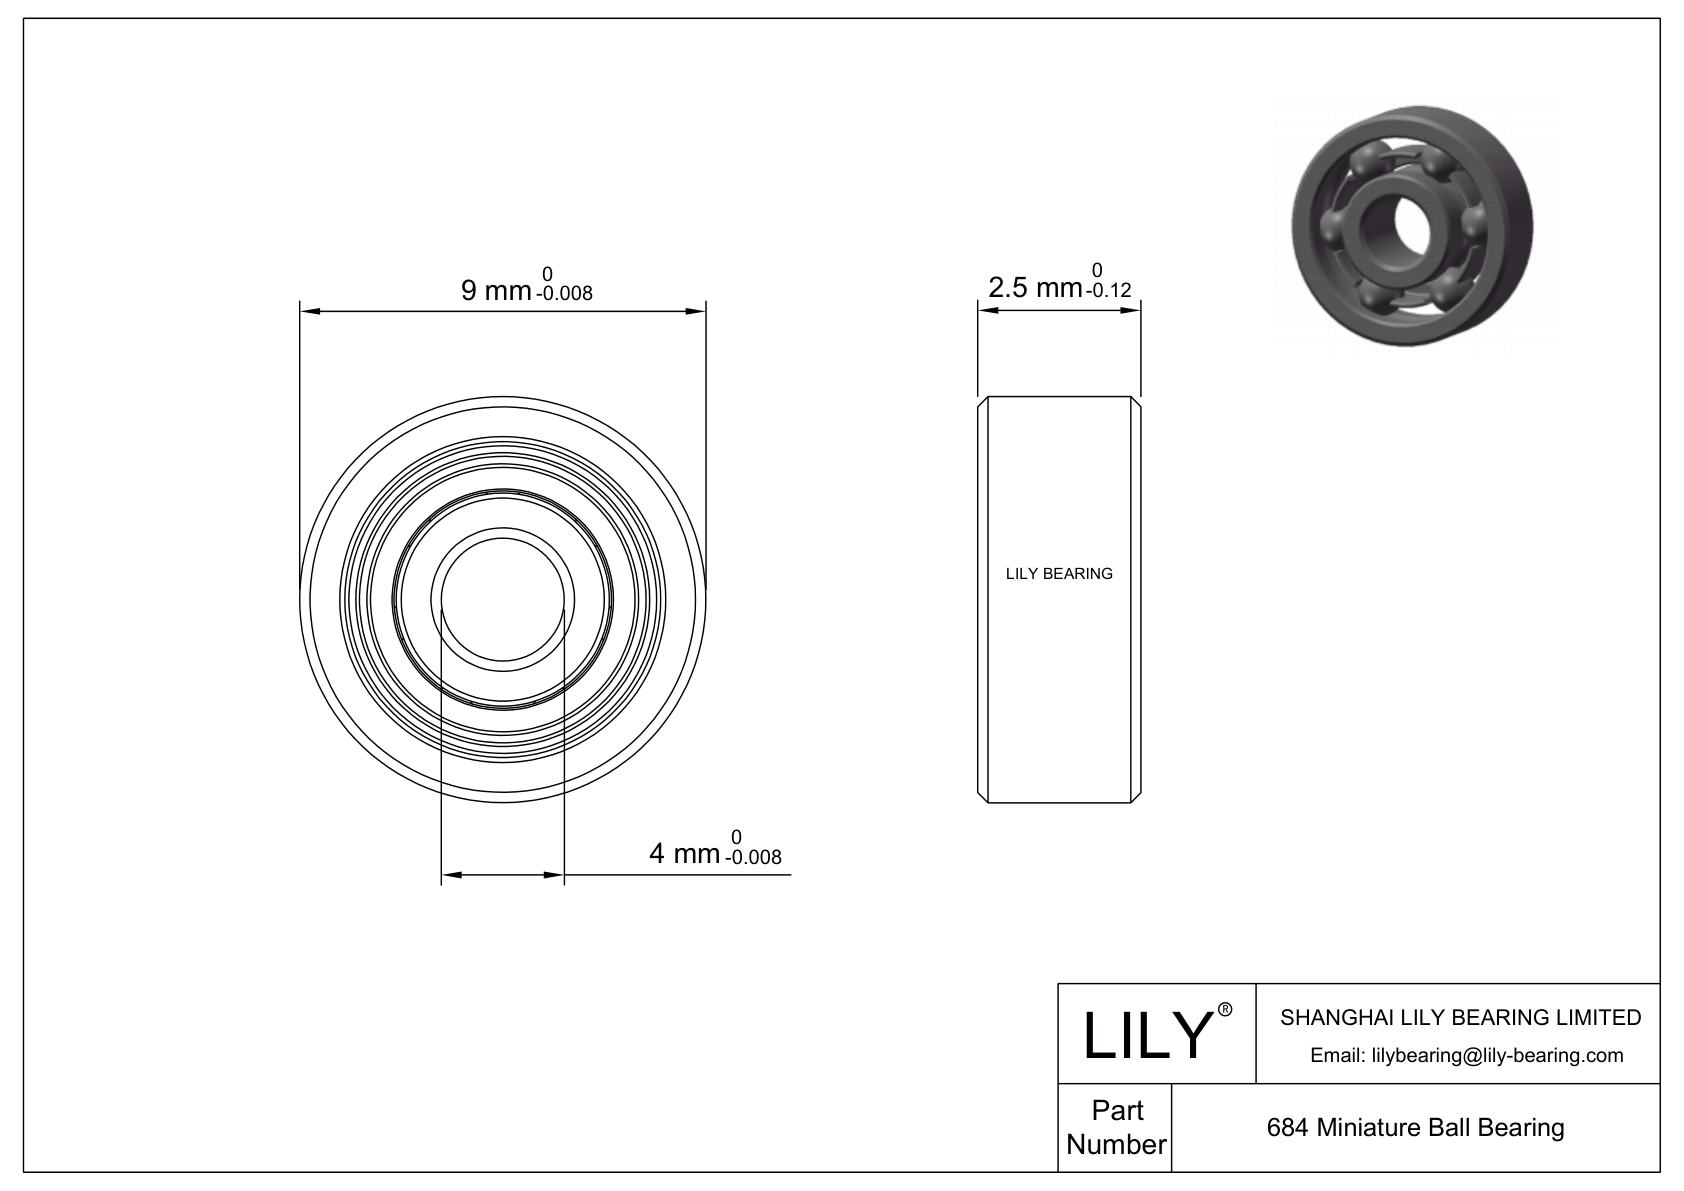 LILY-PU68412-4 Polyurethane Coated Bearing cad drawing